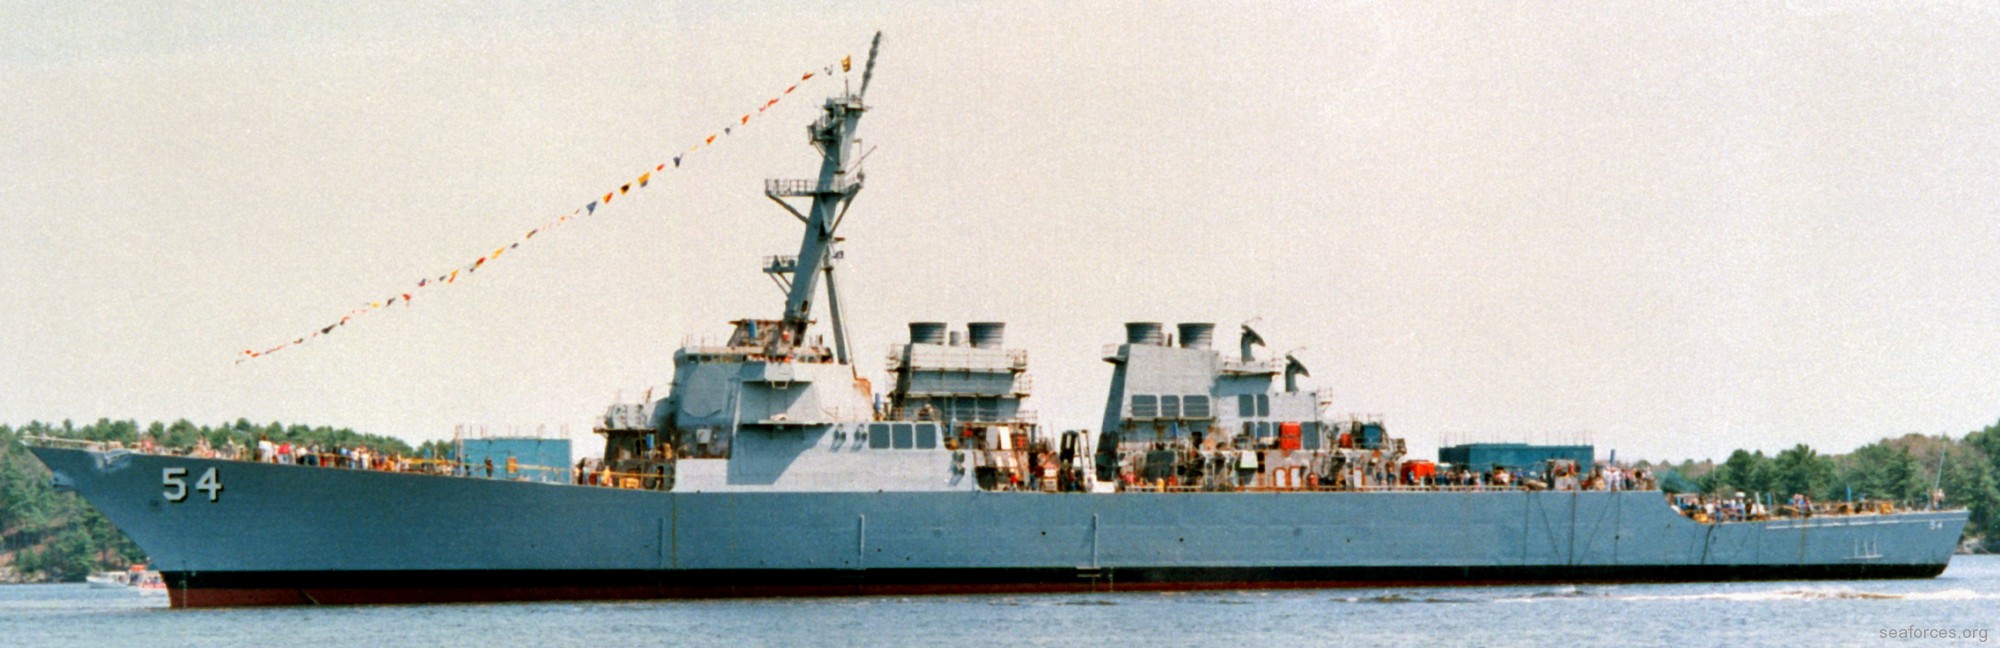 ddg-54 uss curtis wilbur destroyer us navy 101 launching